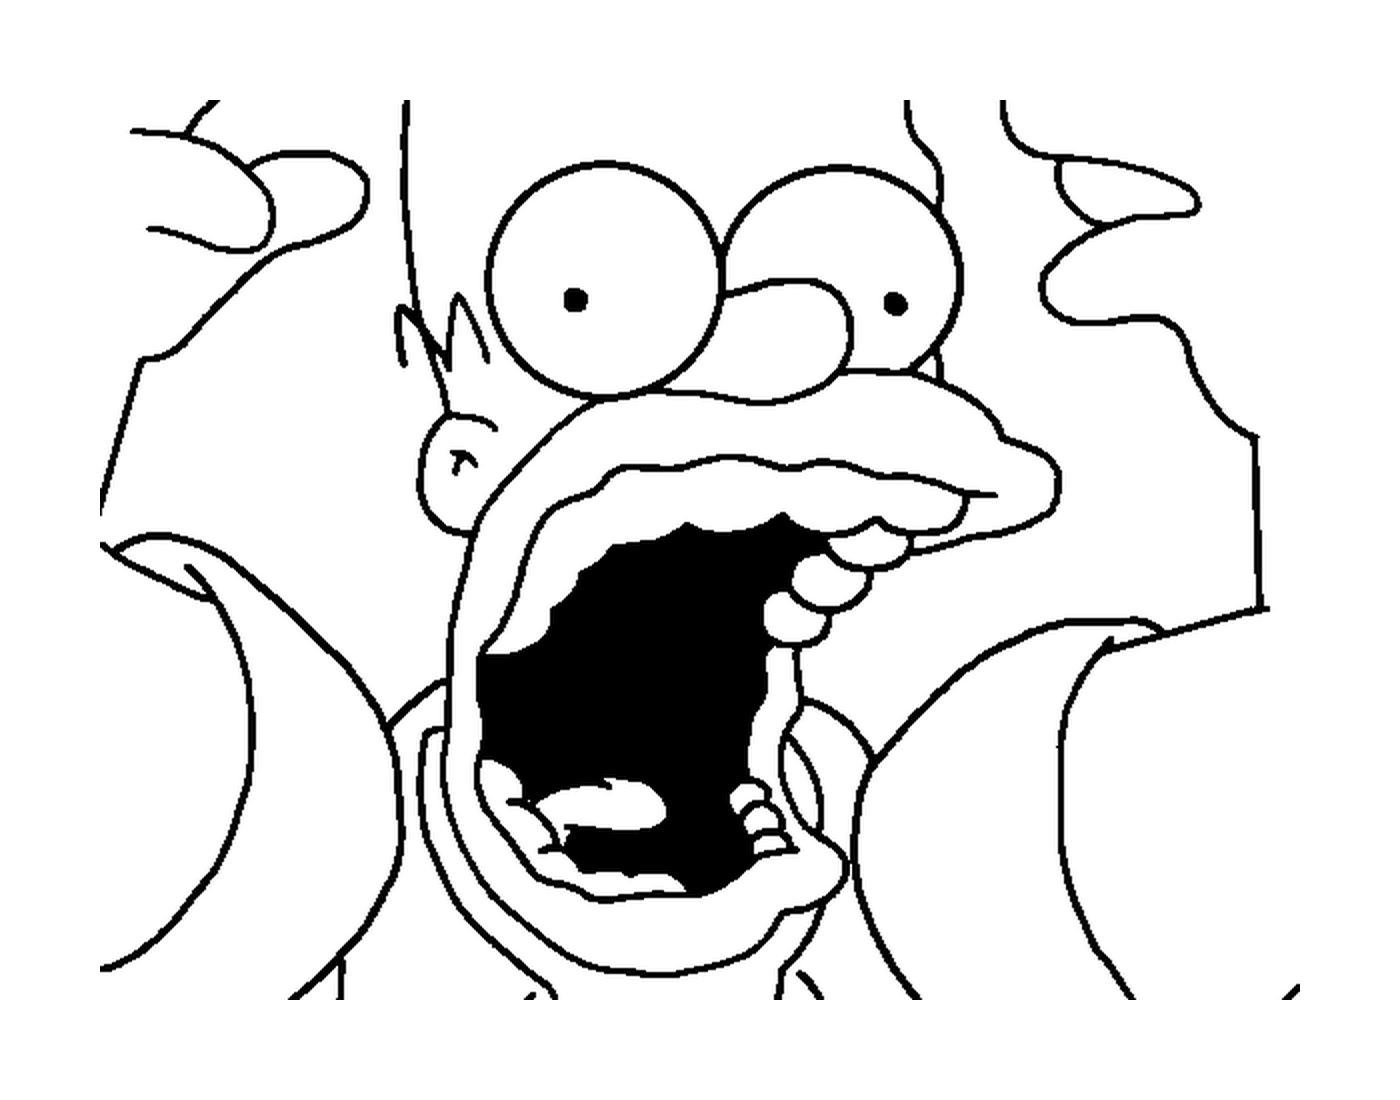  Homero Simpson grita de sorpresa 